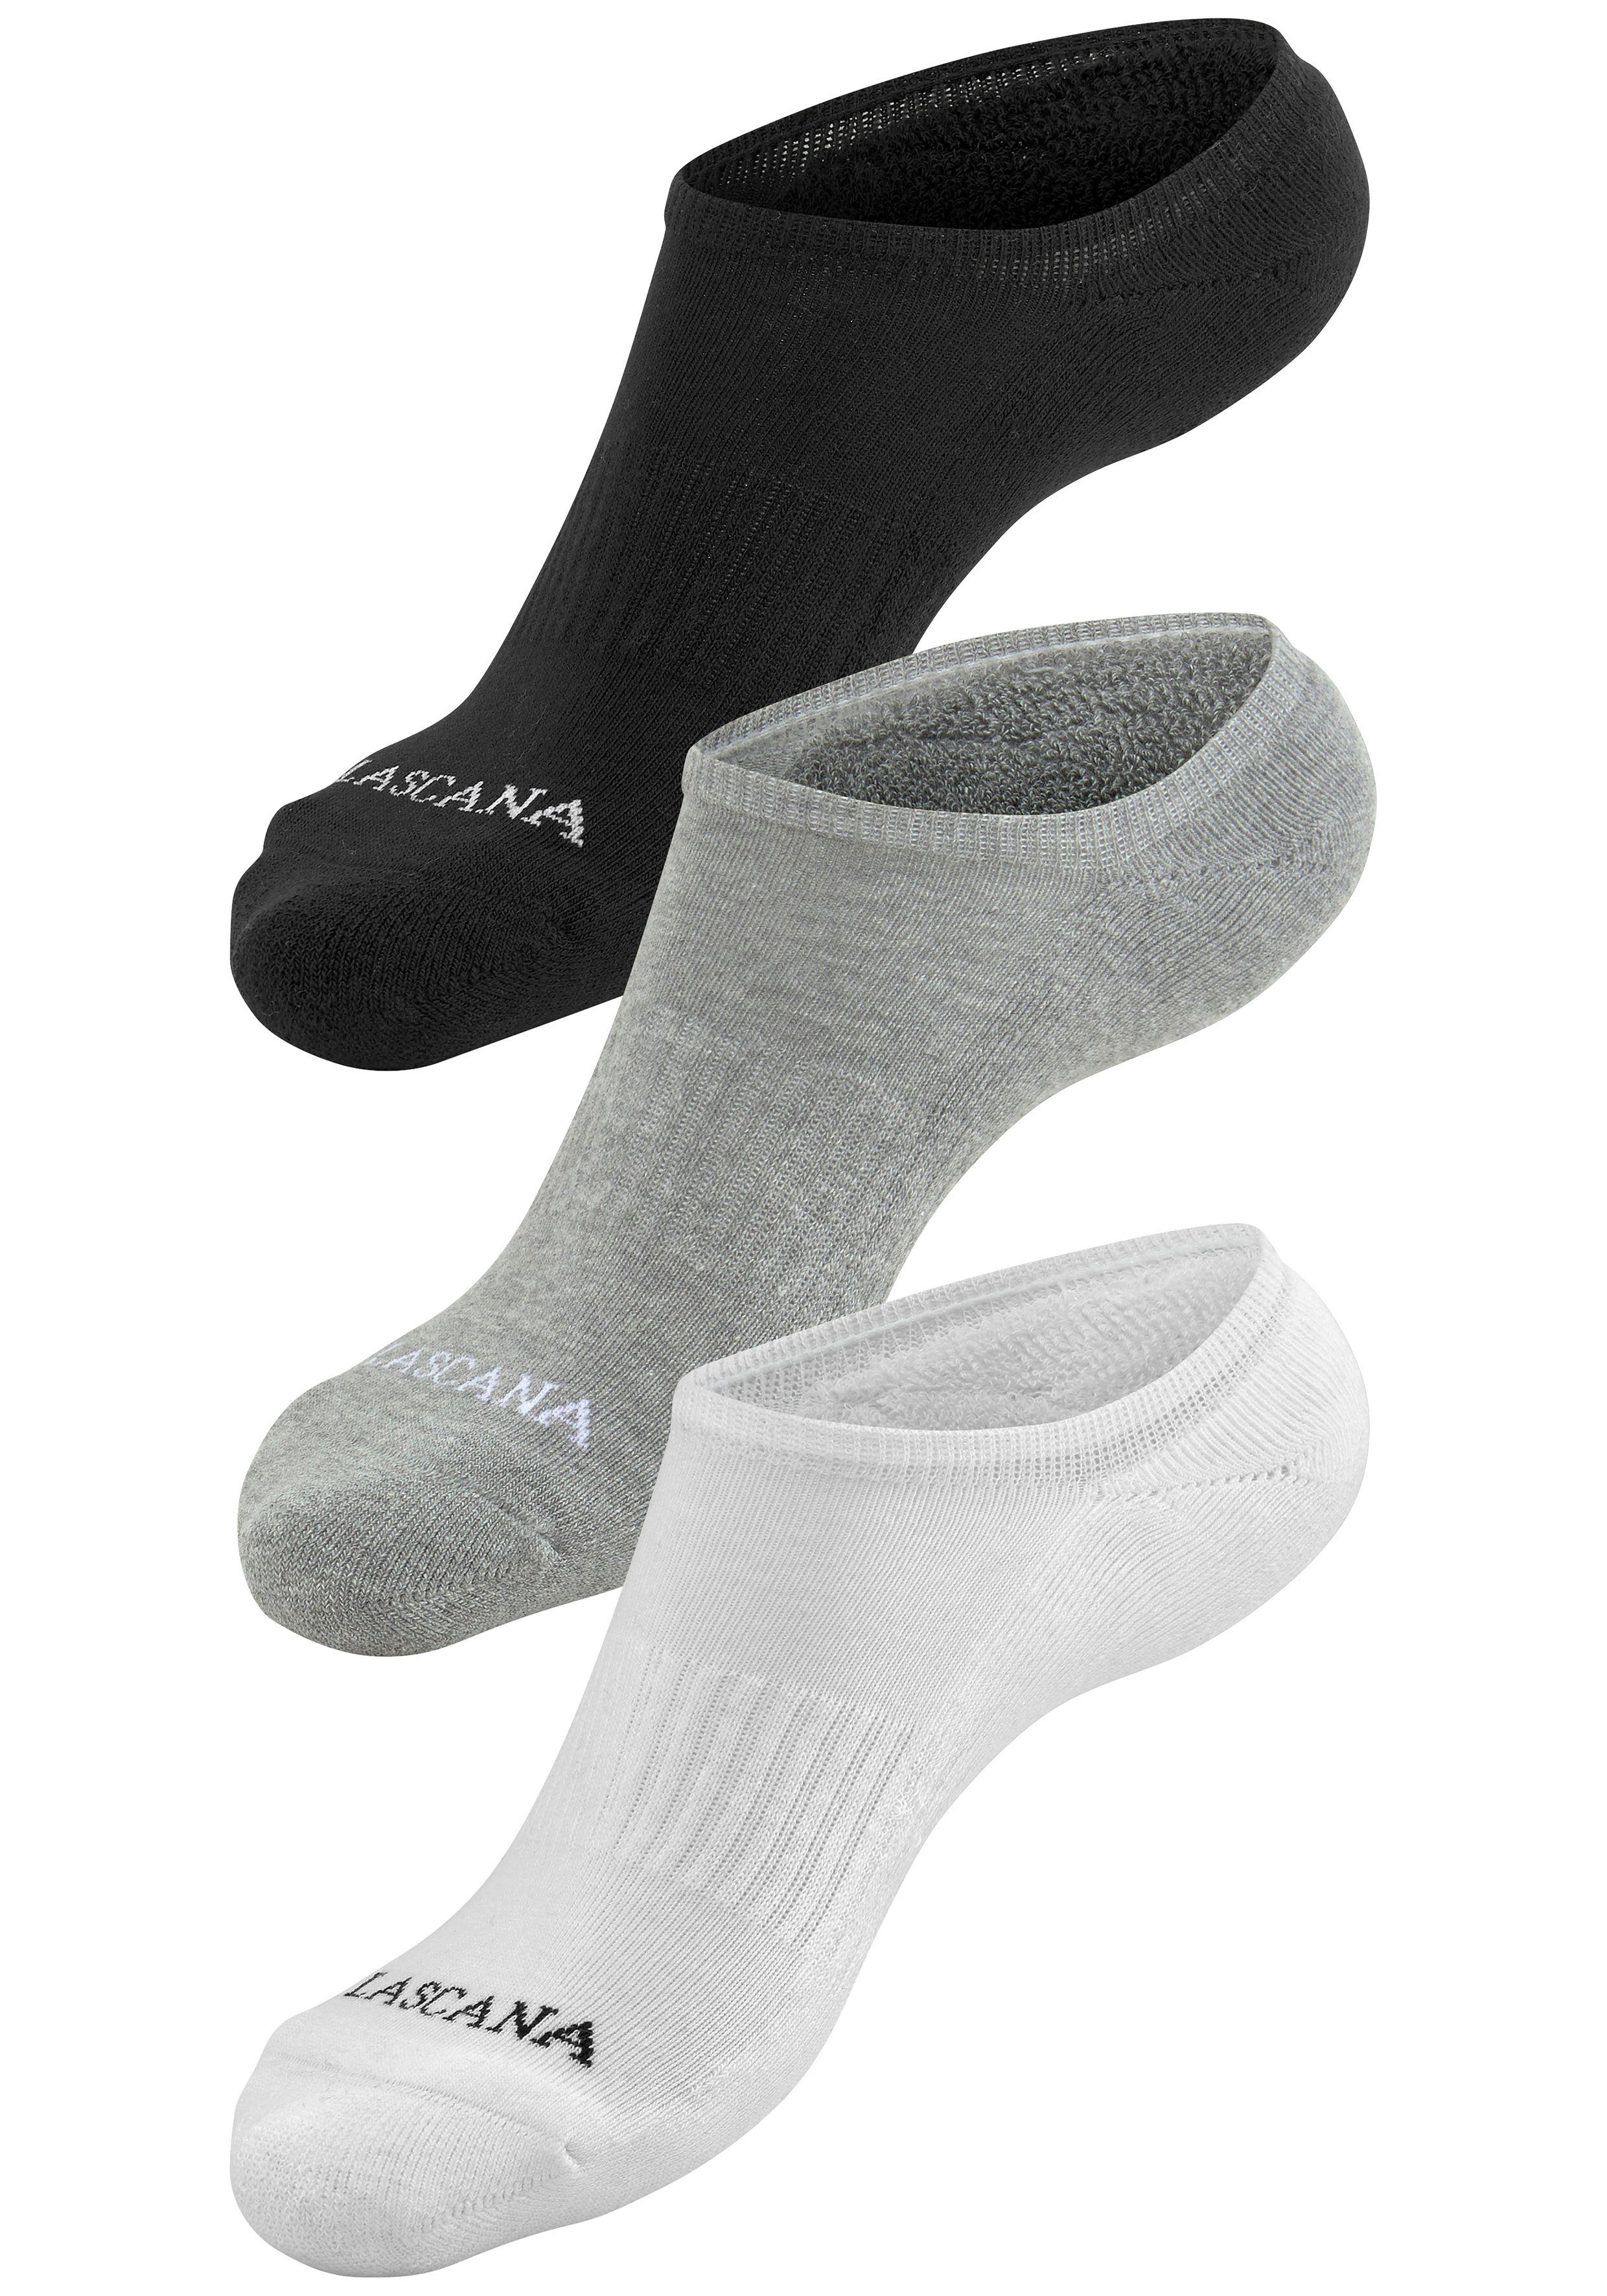 2x Sneakersocken 3x 7-Paar) ACTIVE Fußfrottee weiß, schwarz, 2x (Set, mit grau-meliert LASCANA